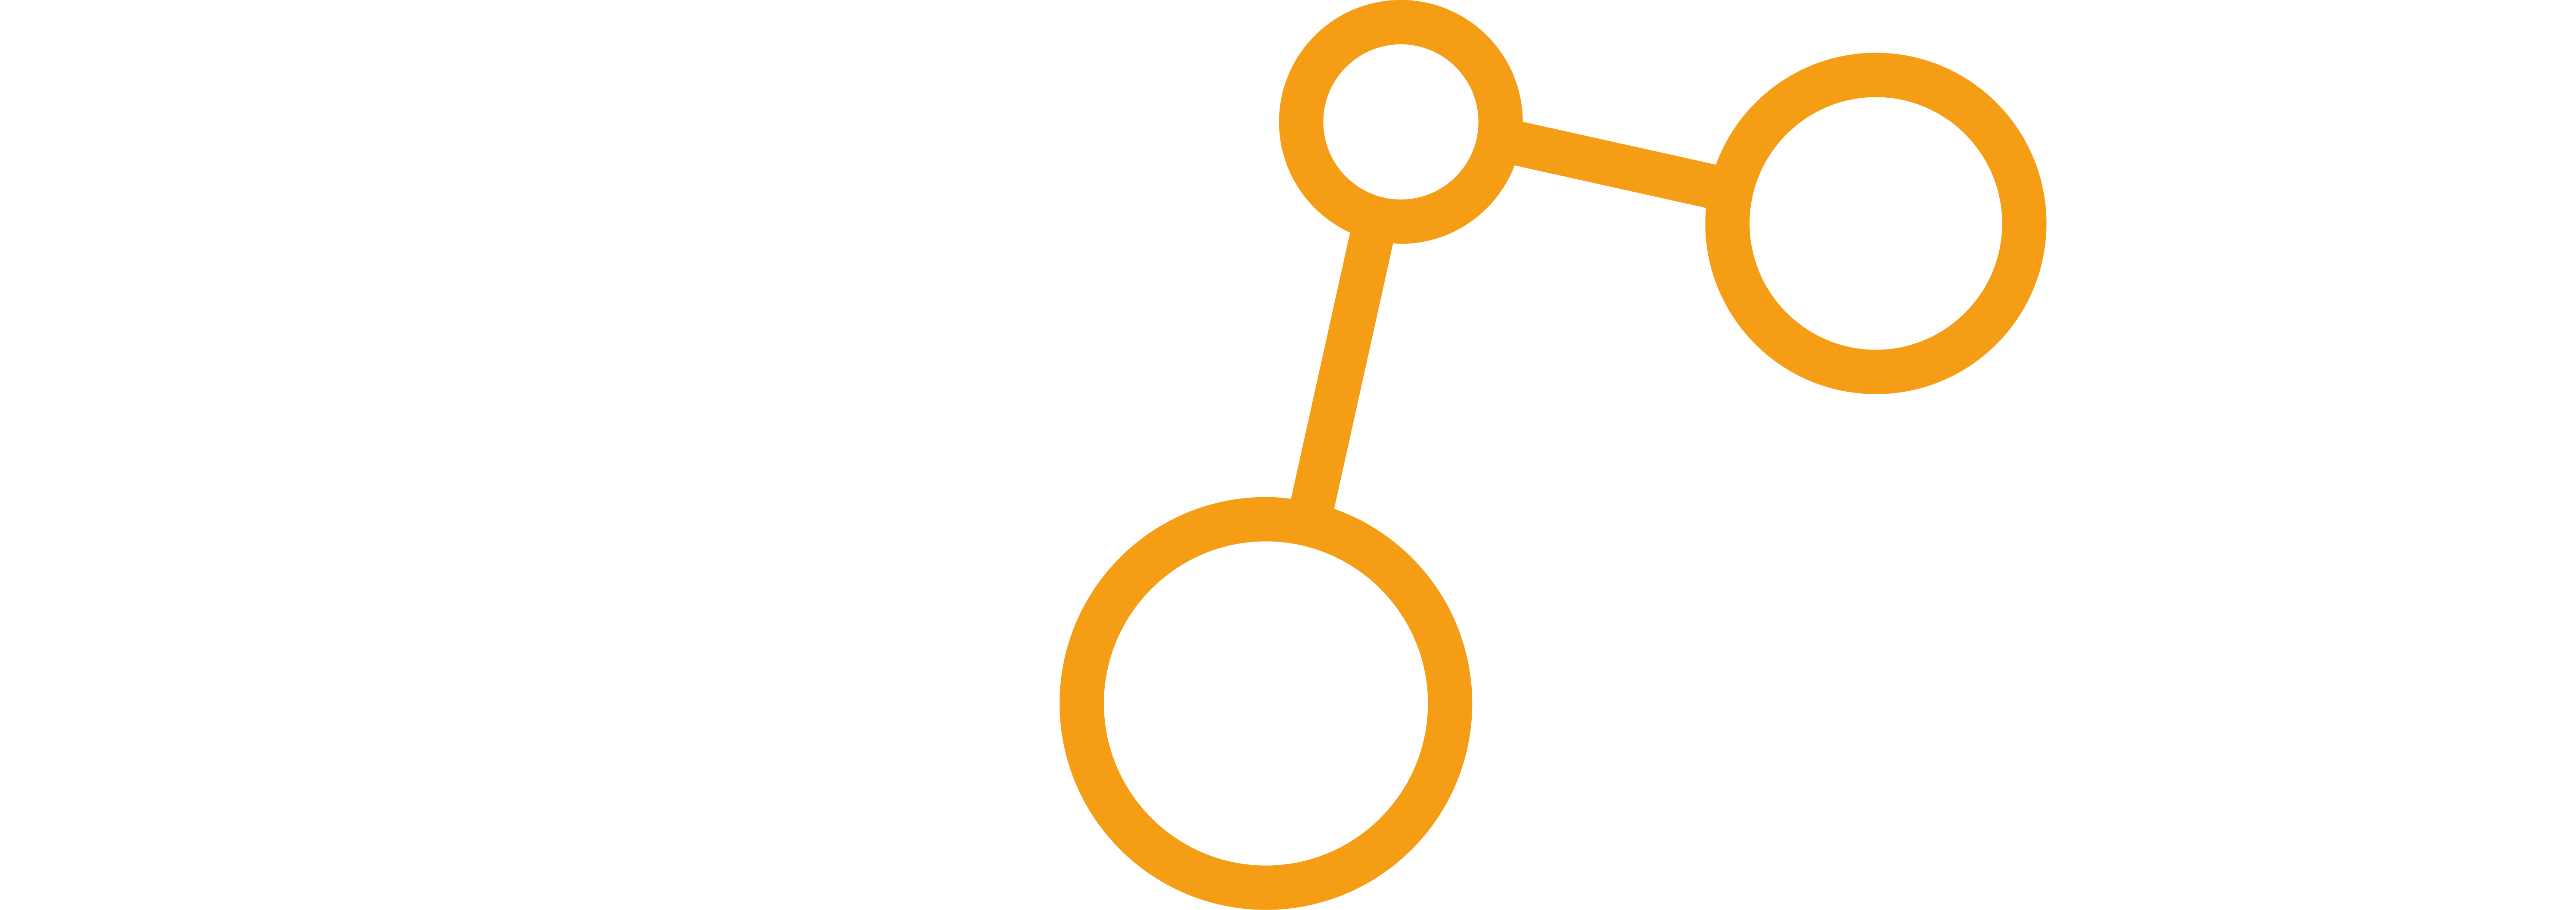 Chorus Logo WO